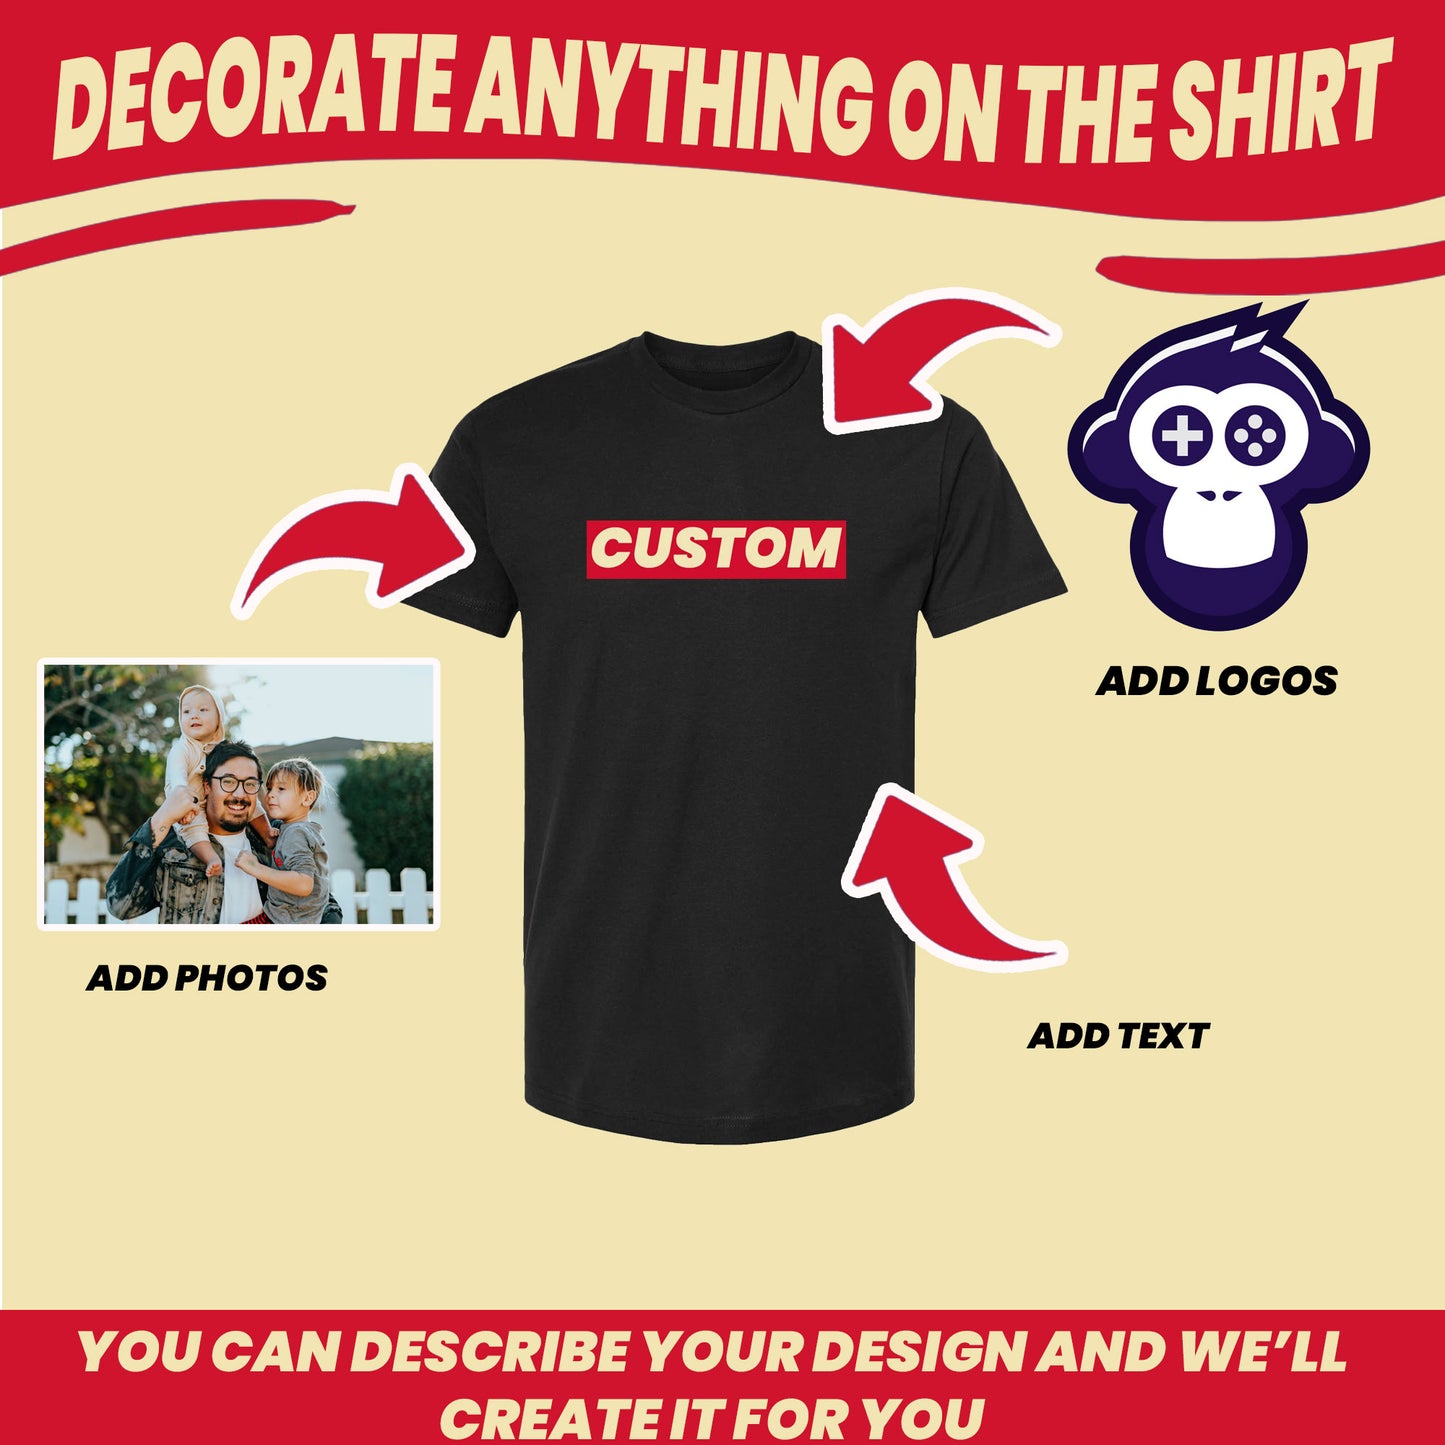 Custom black t-shirts with any design. Photos, logos, designs, text